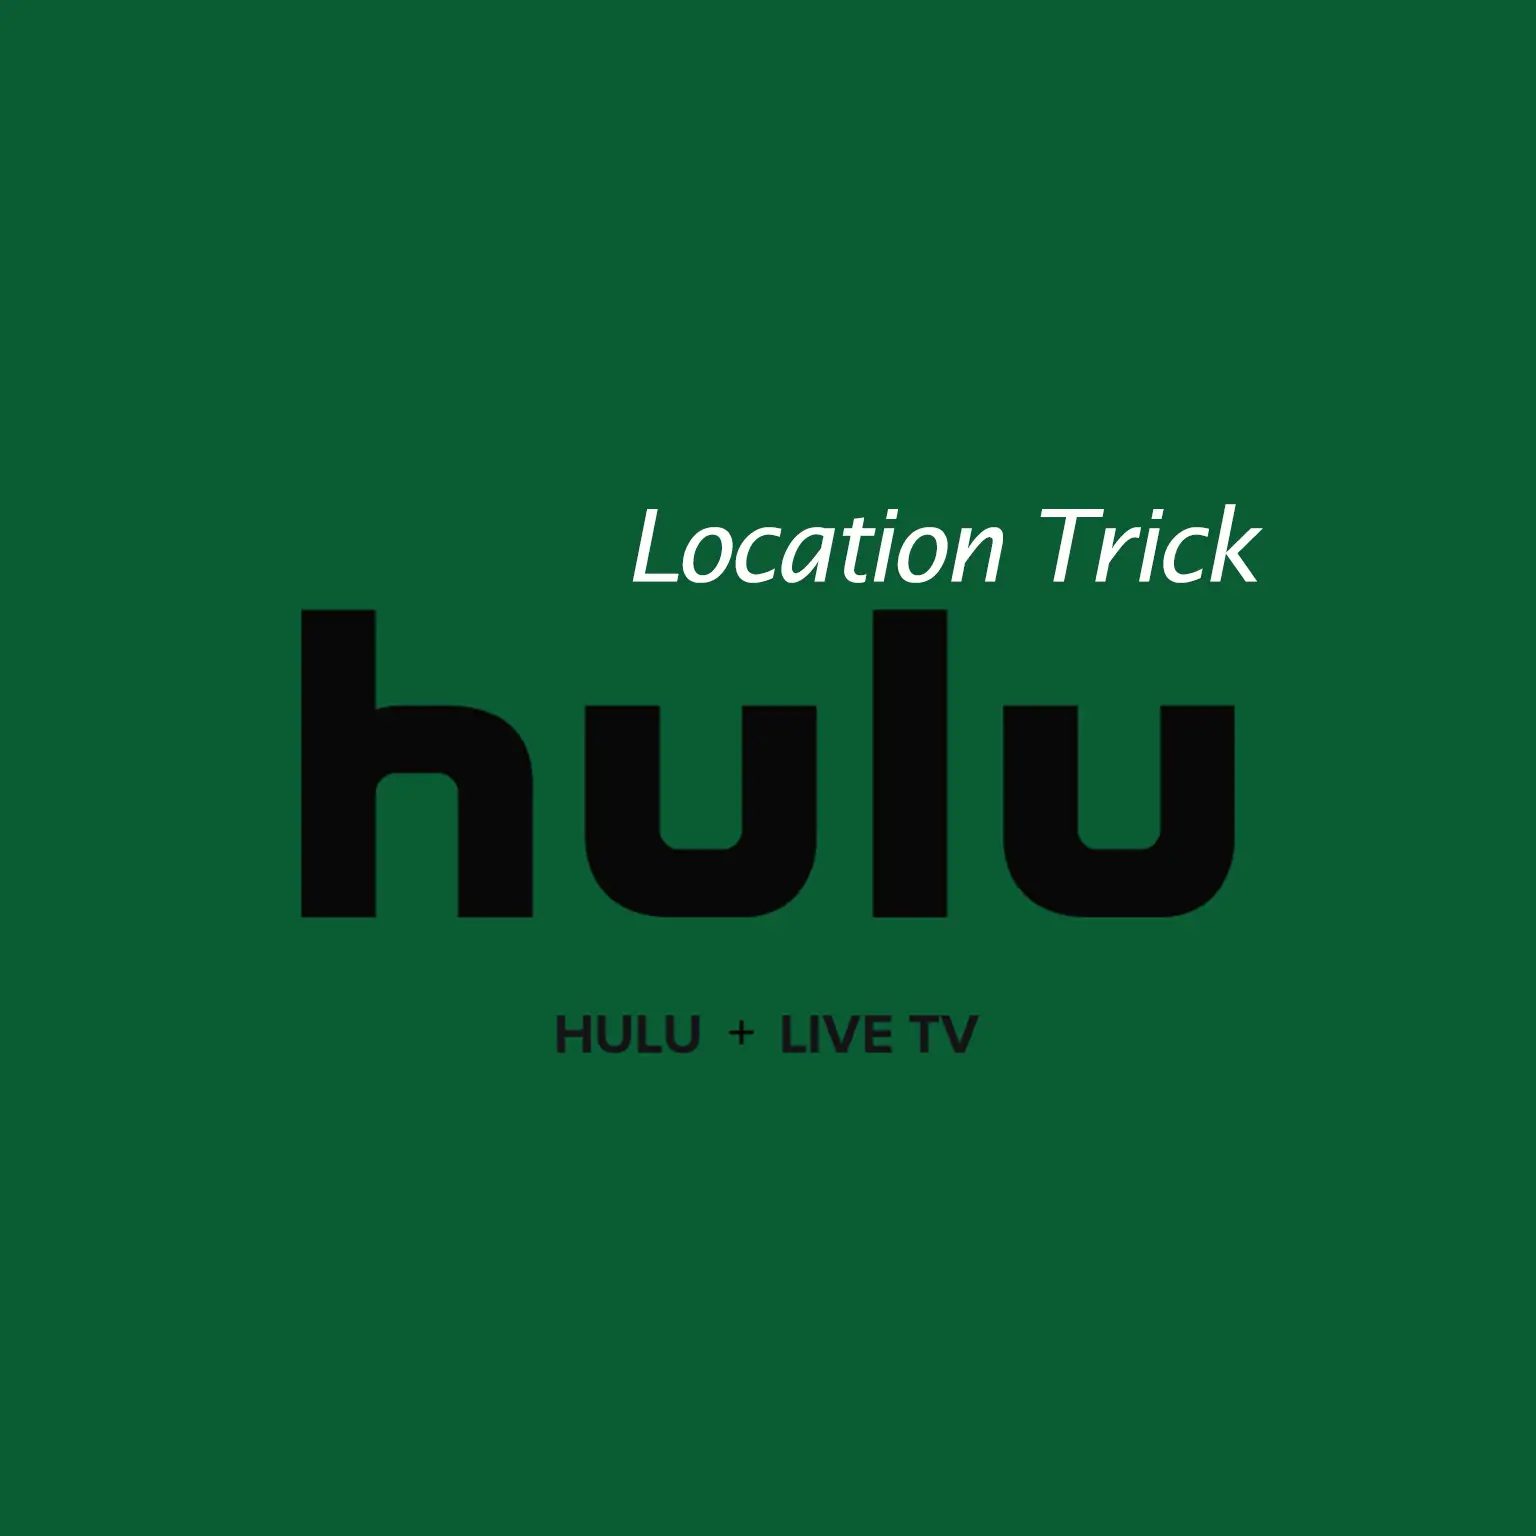 How to Get Around Hulu Location Trick